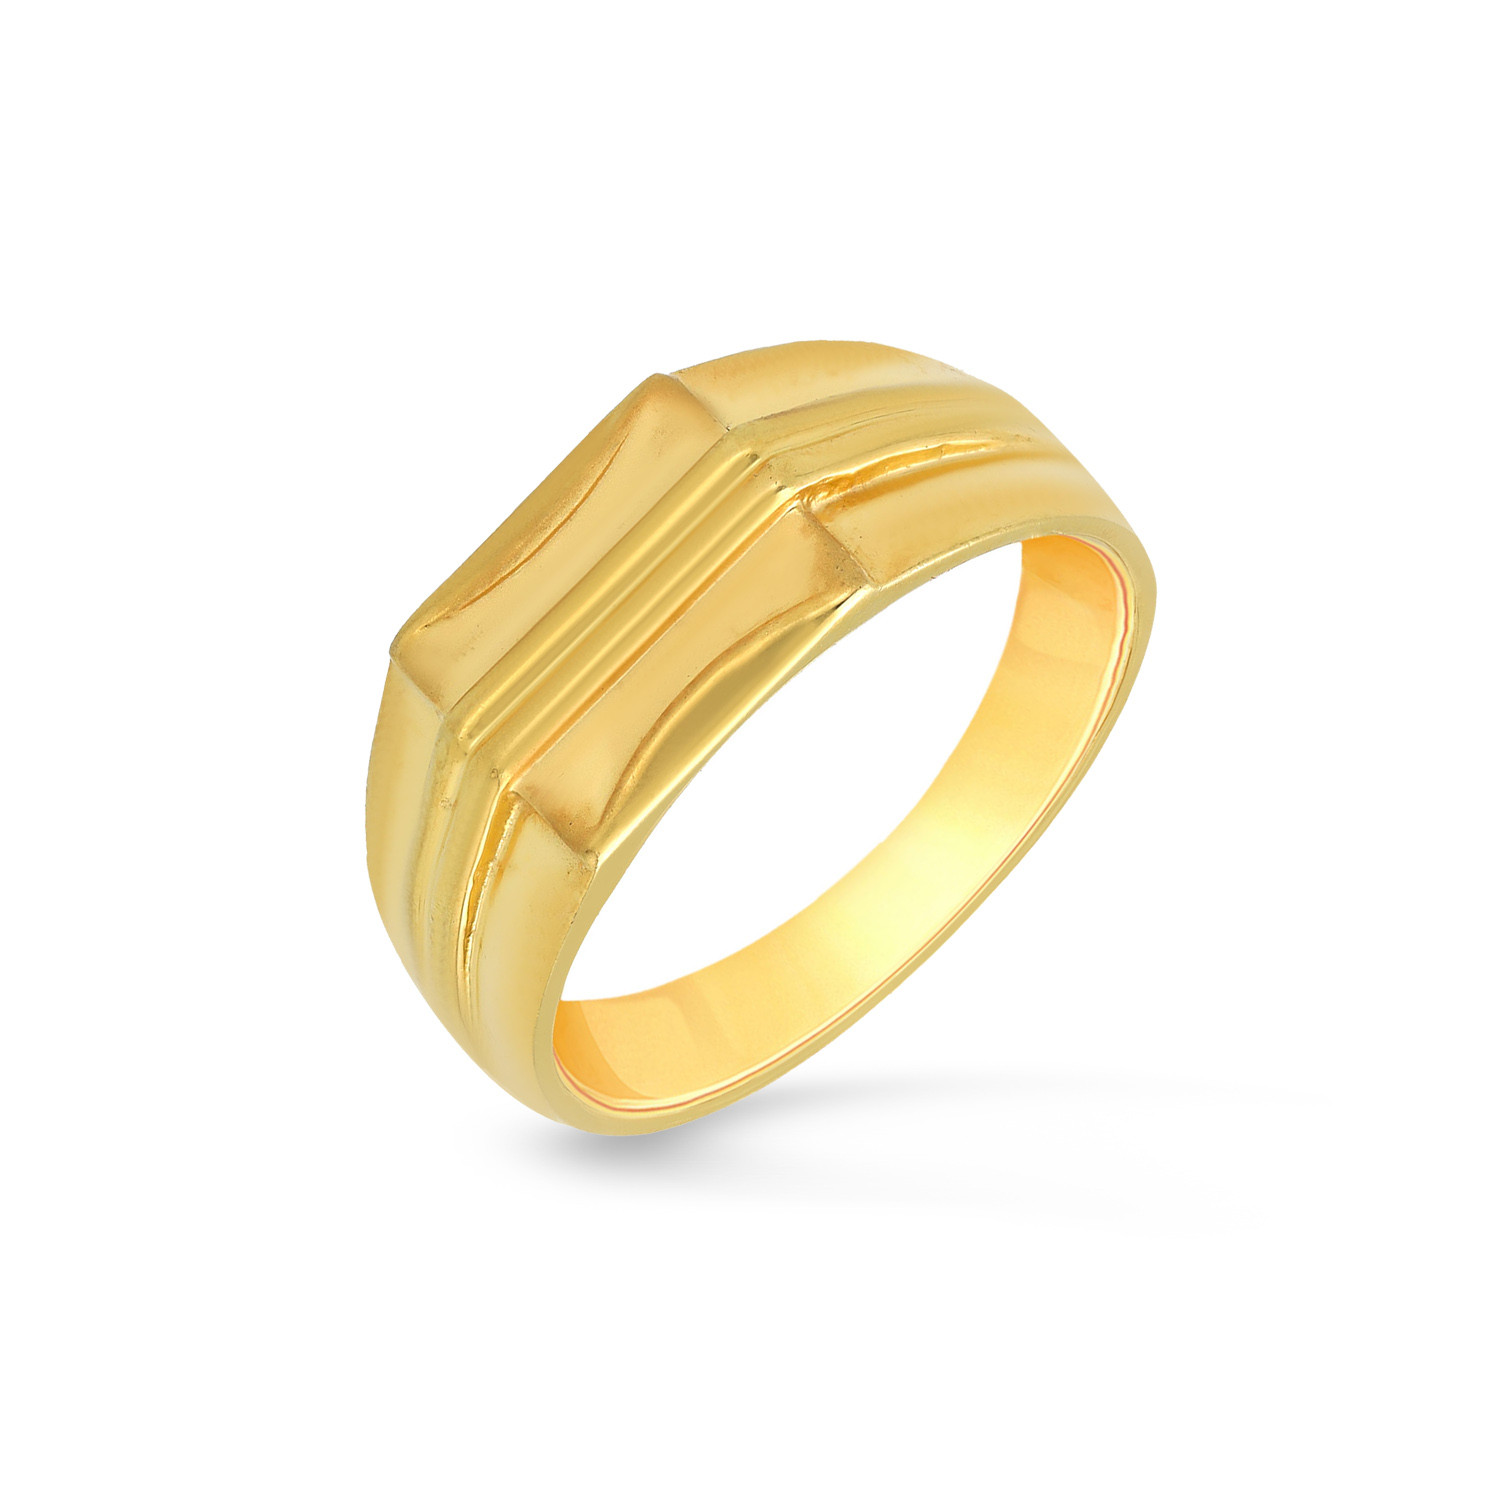 Malabar 22 KT Gold Studded Ring For Men FRGEDZRURGW746